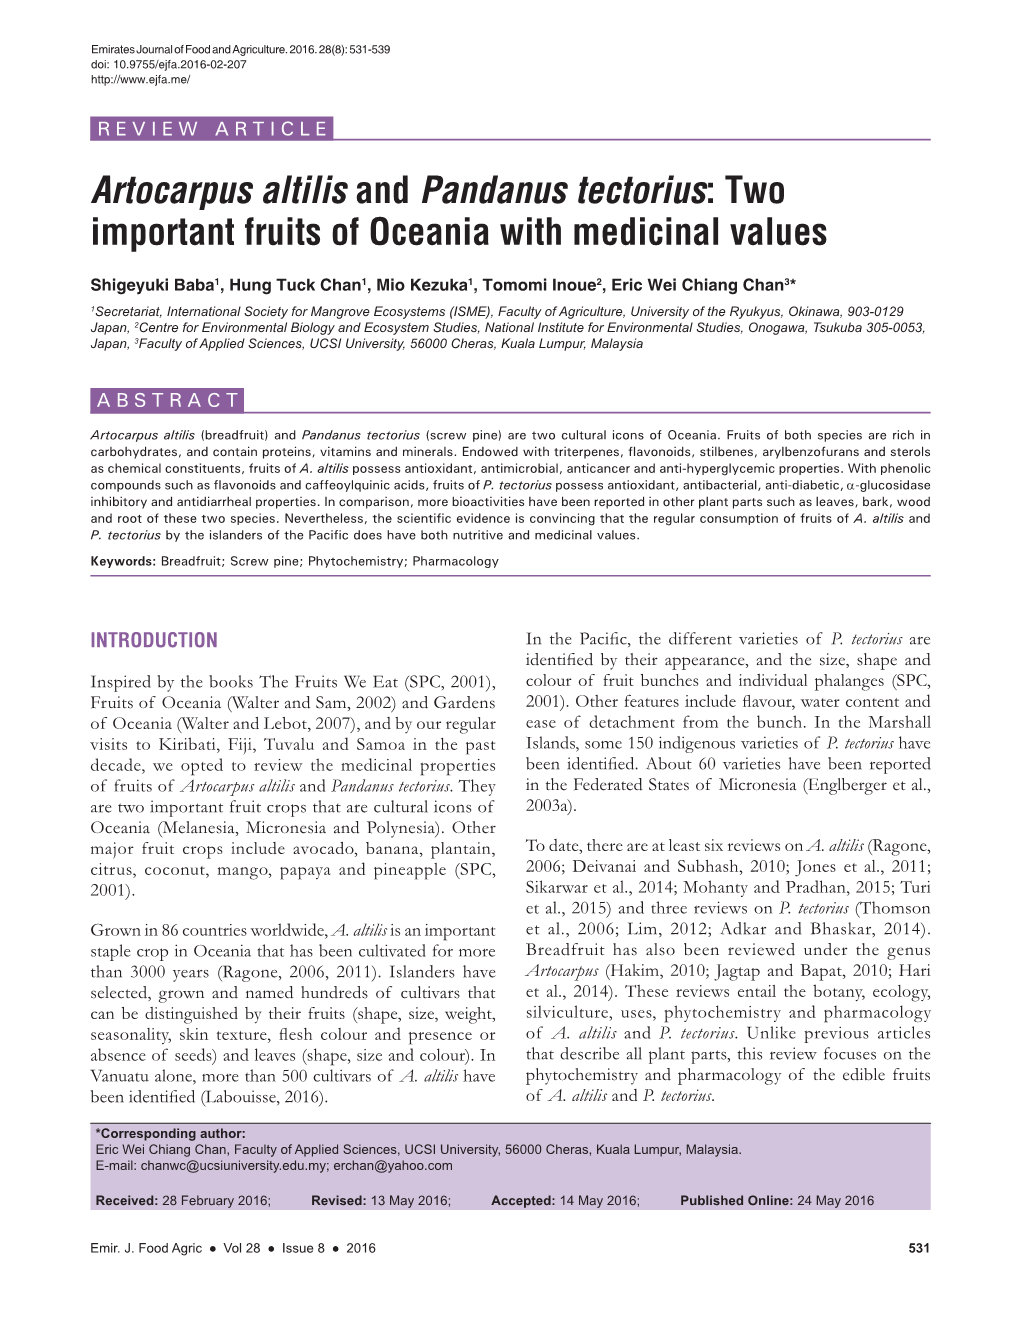 Artocarpus Altilis and Pandanus Tectorius: Two Important Fruits of Oceania with Medicinal Values